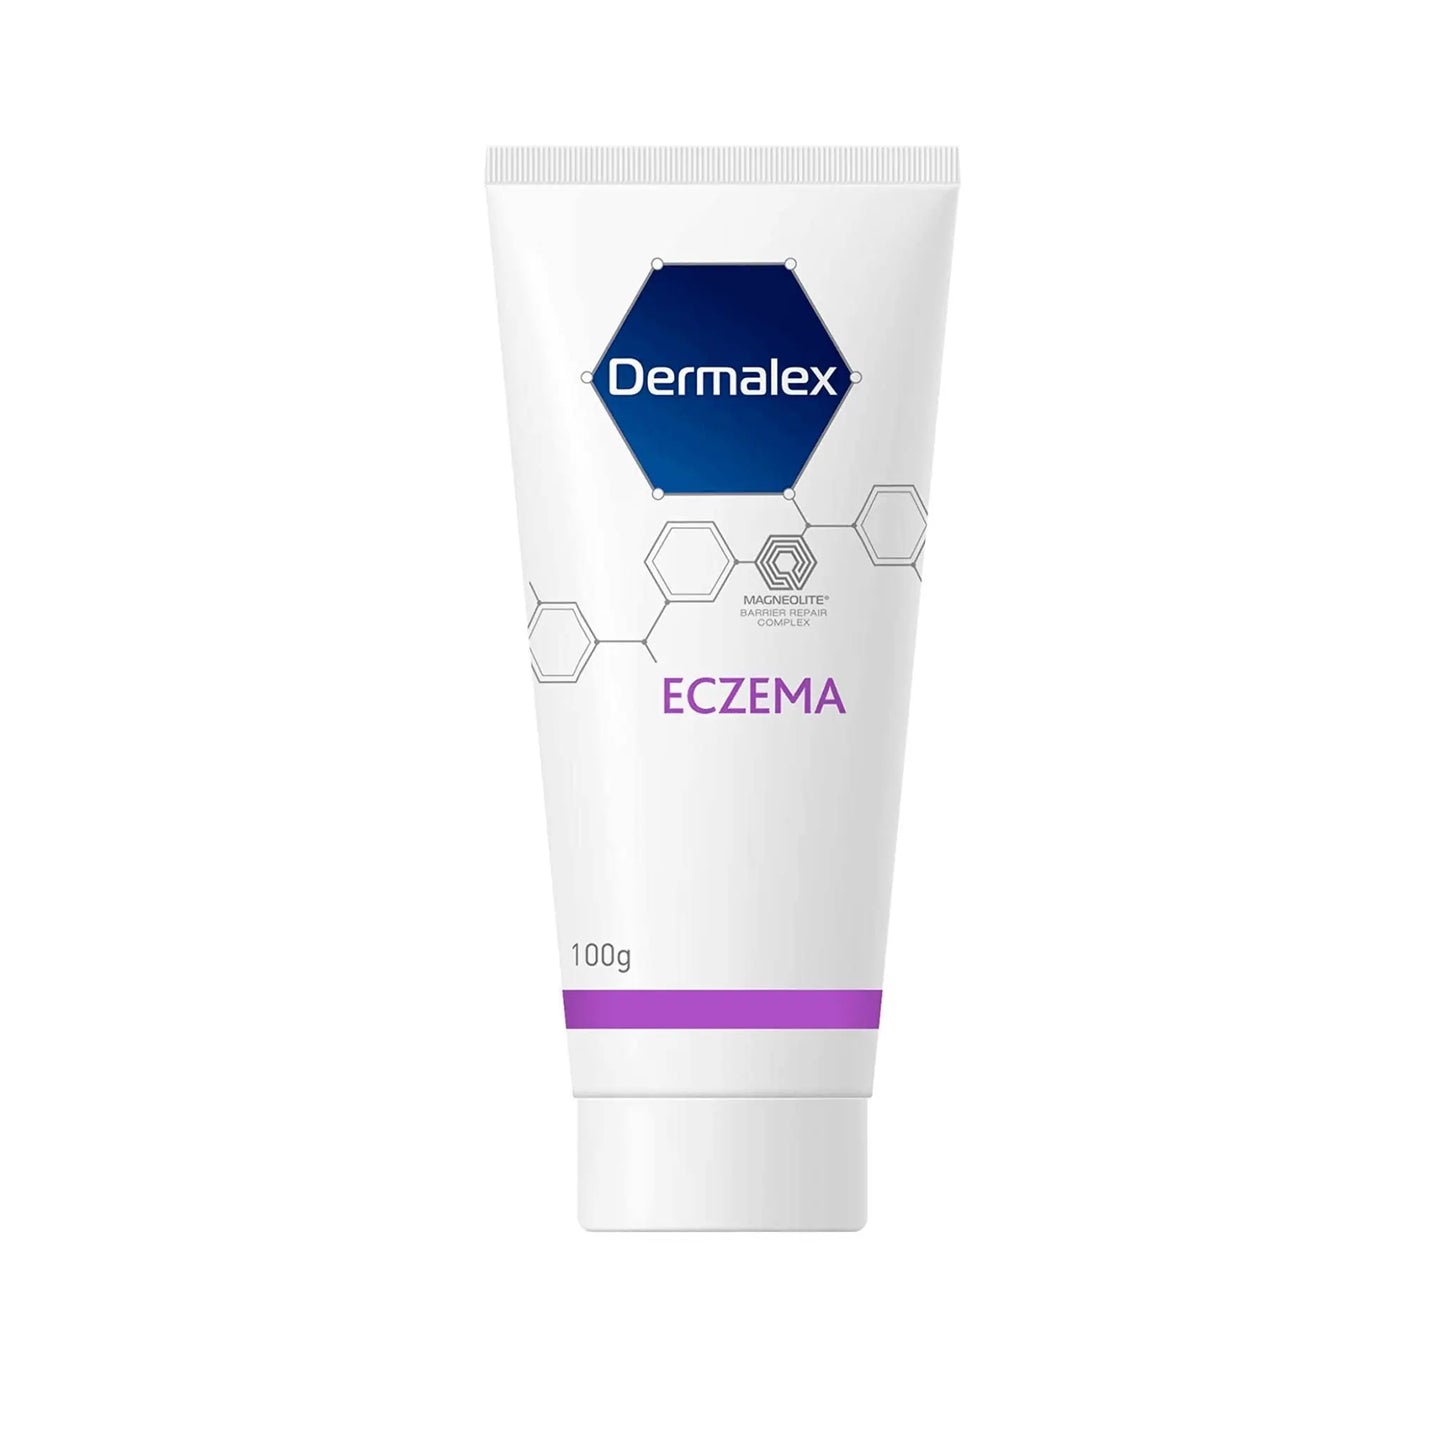 Dermalex Eczema Treatment Cream For Atopic Eczema 100g